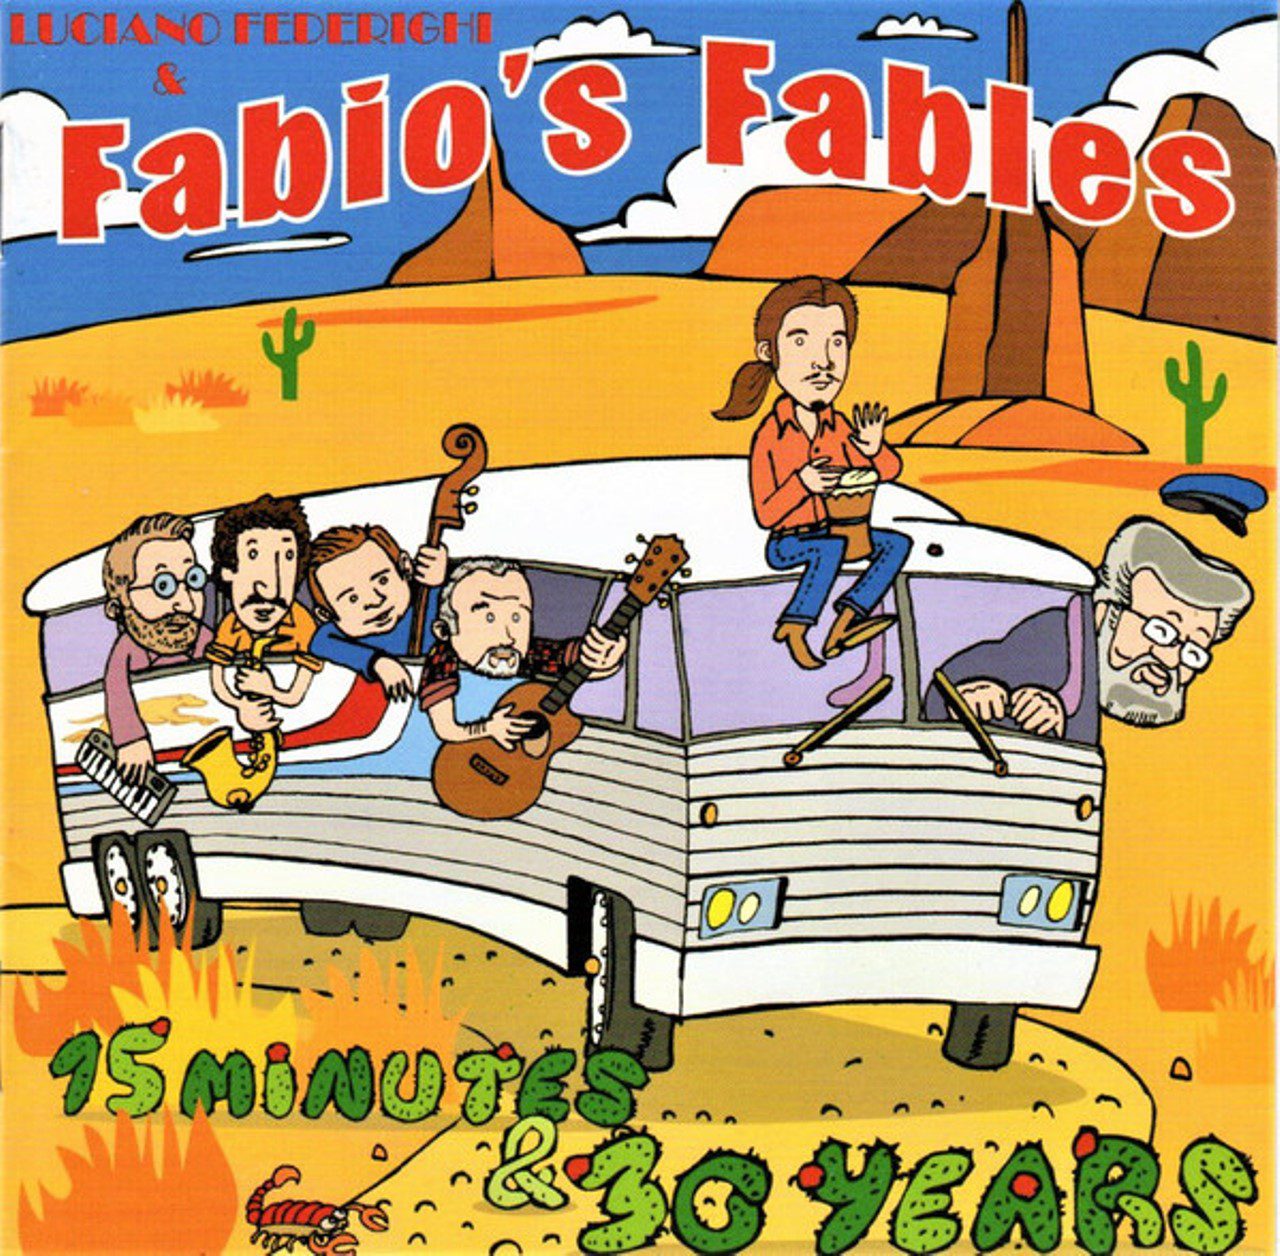 Luciano Federighi e Fabio's Fables - 15 Minutes & 30 Years cover album